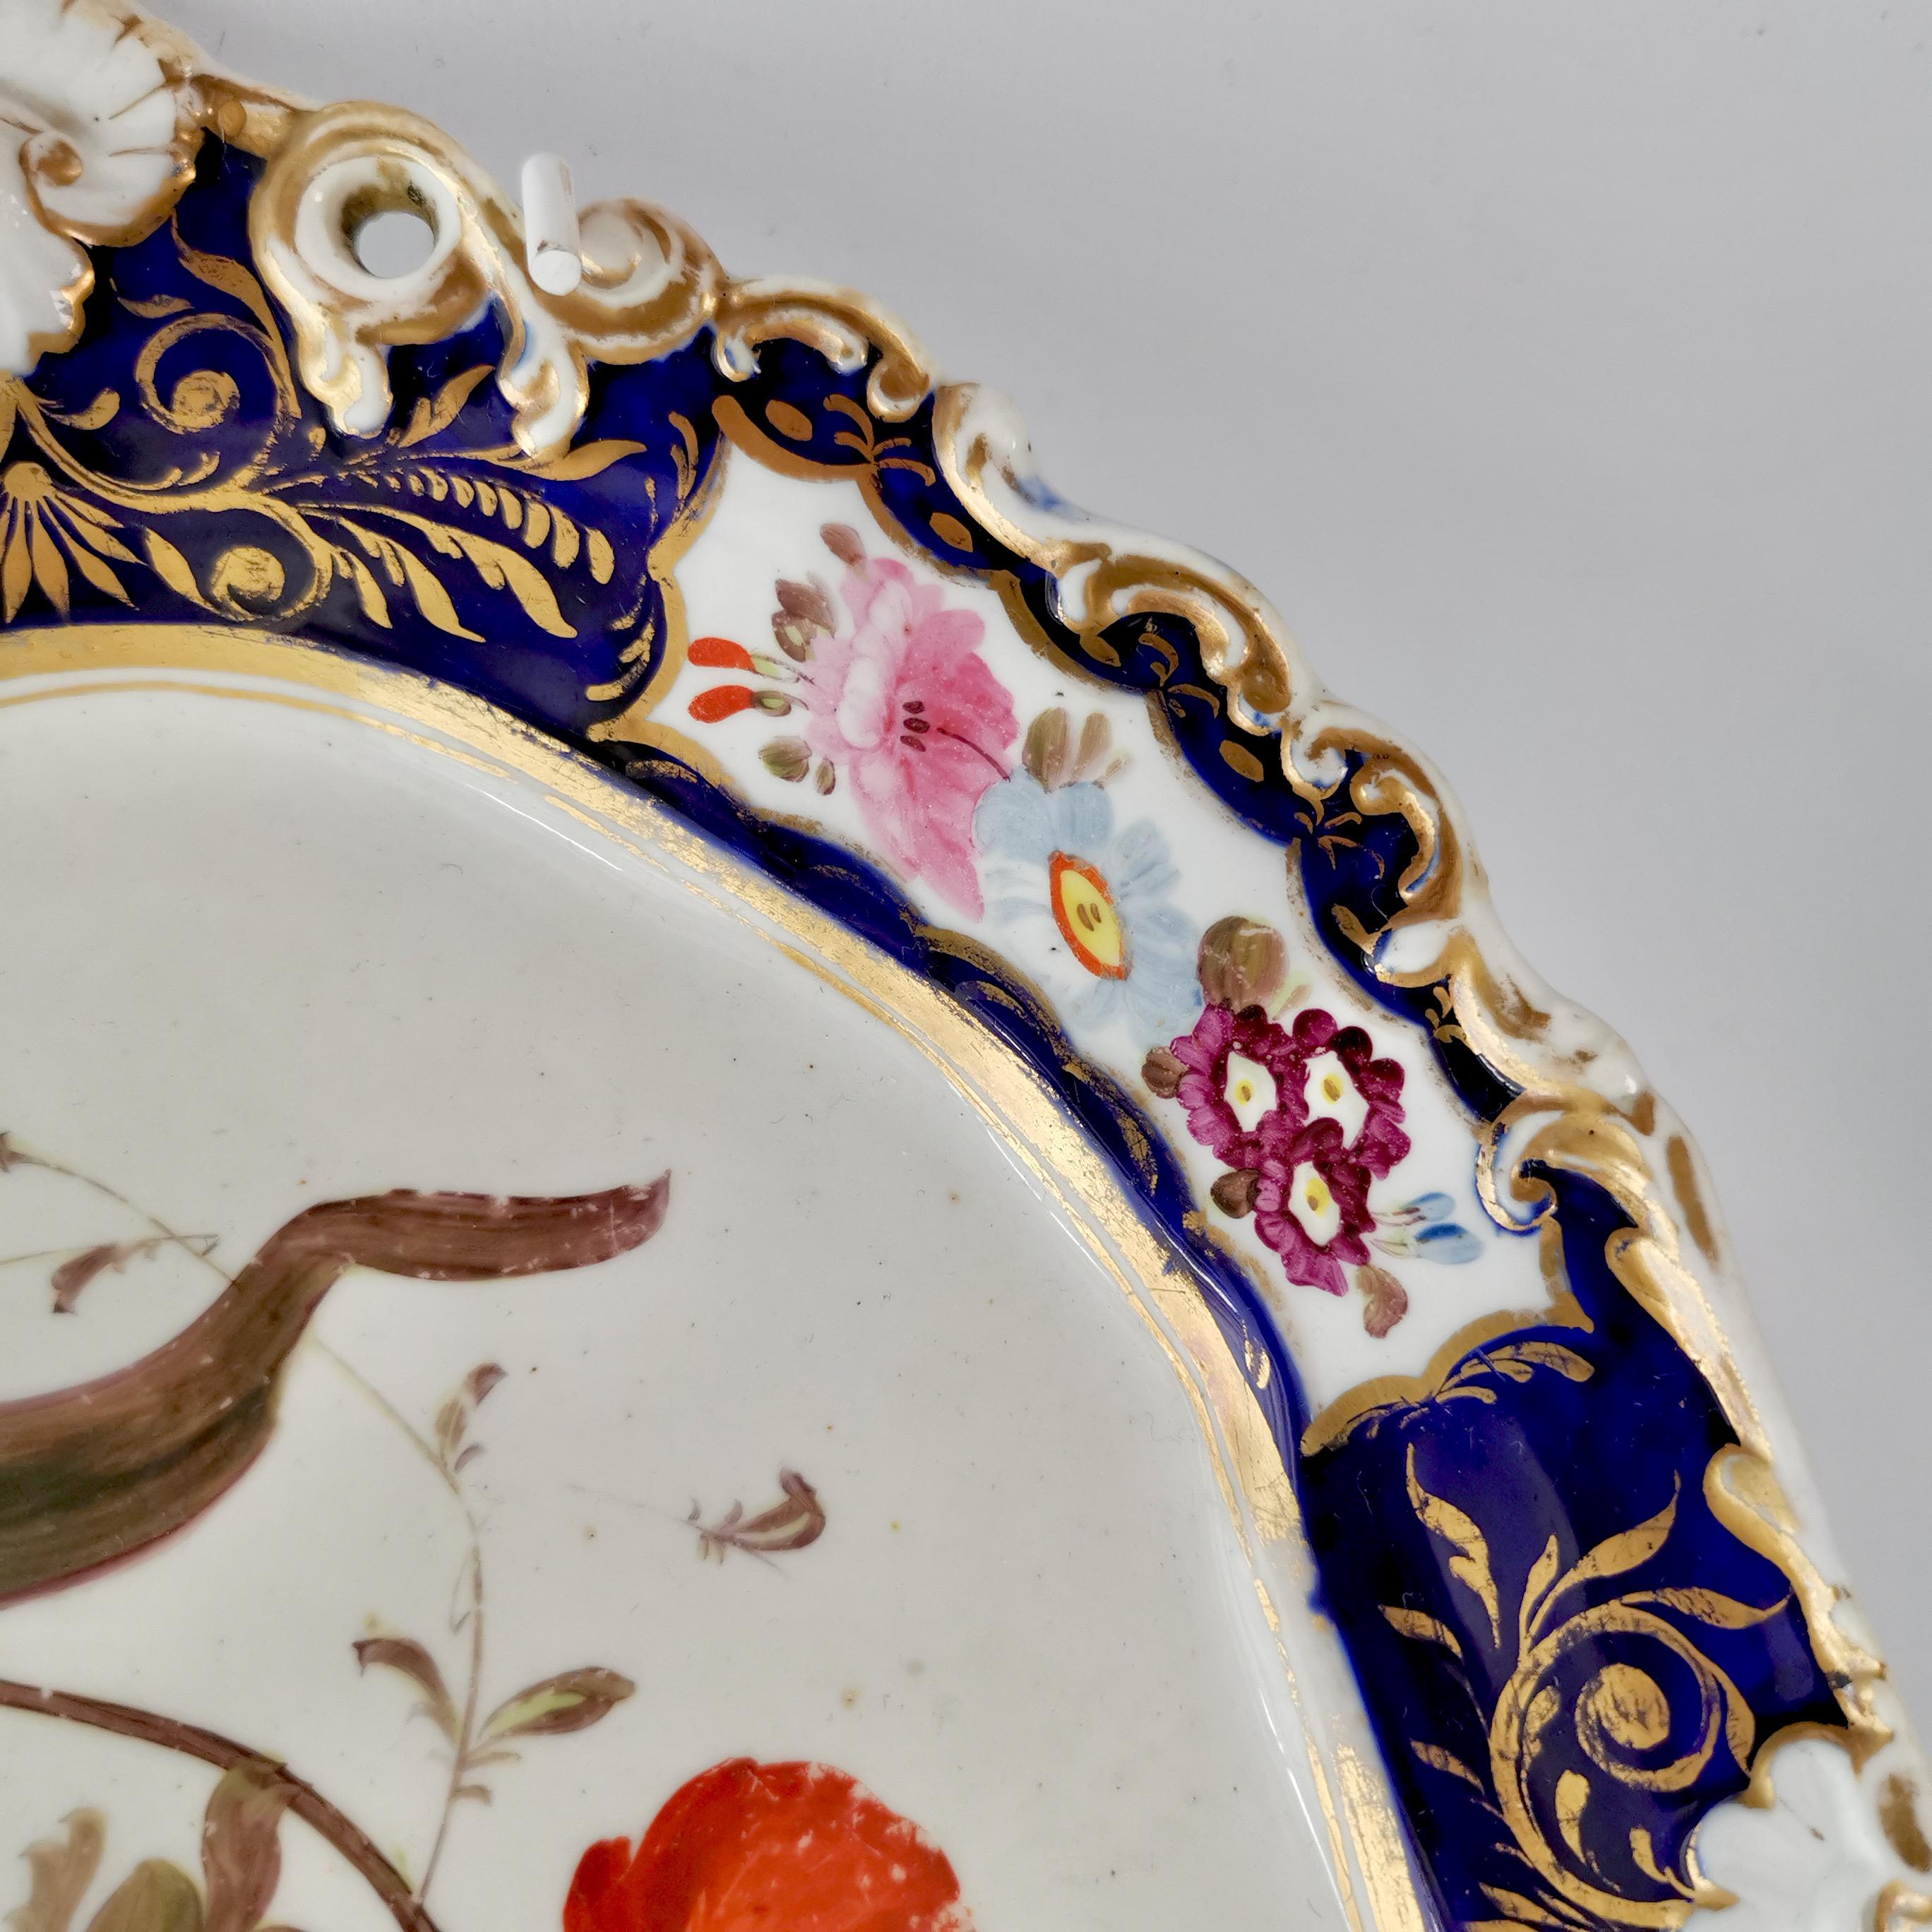 New Hall Porcelain Part Dessert Service, Cobalt Blue, Flowers, Regency 1824-1830 10